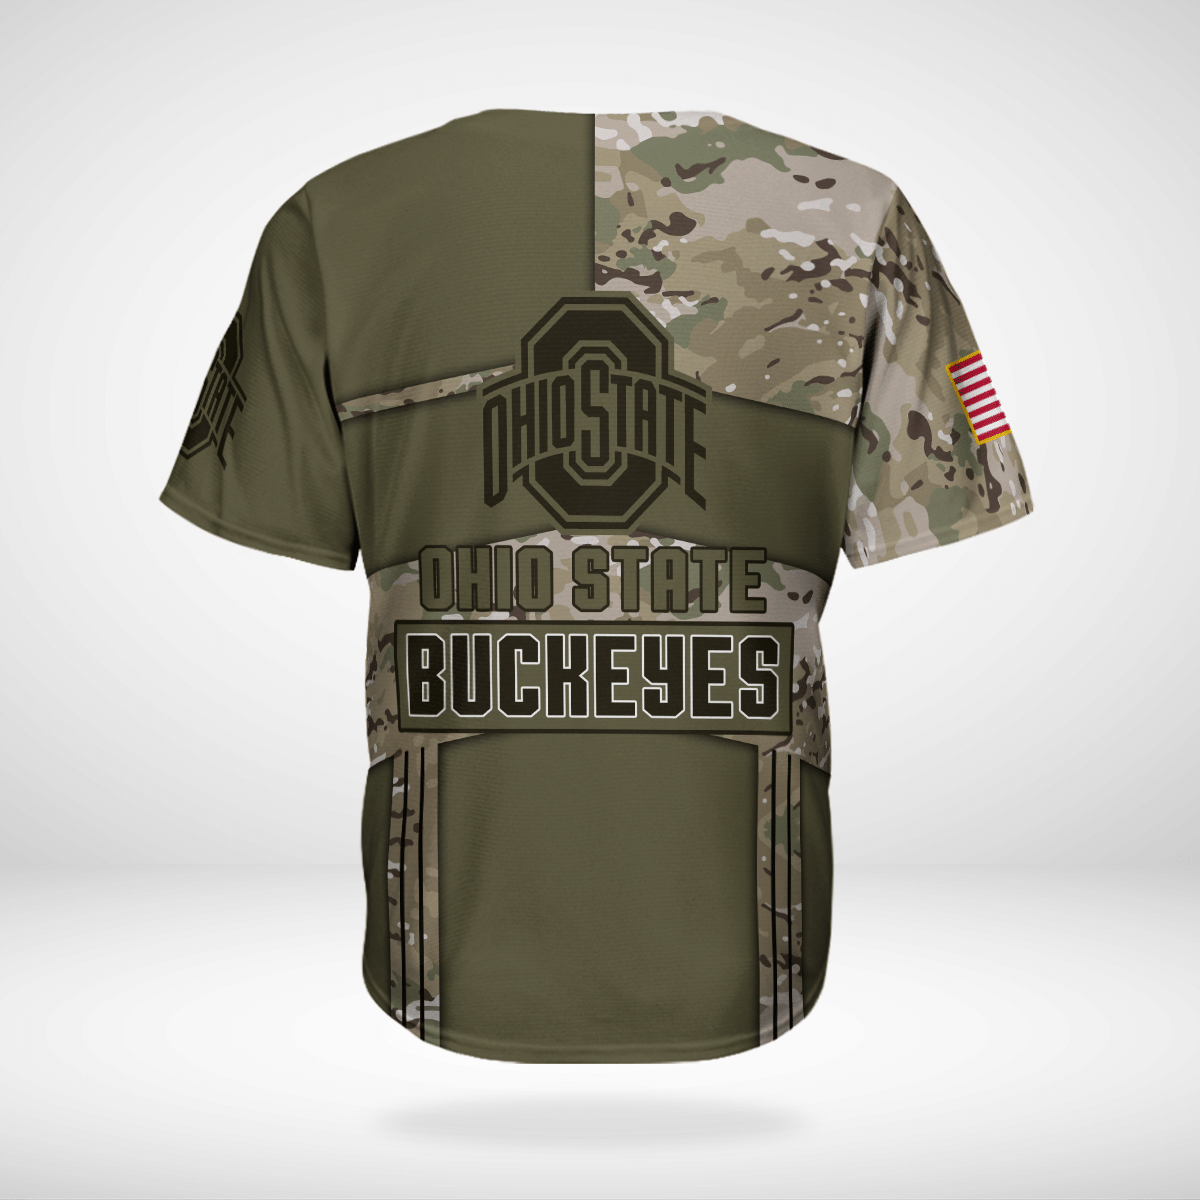 Ohio State Buckeyes Military Style Baseball Jersey